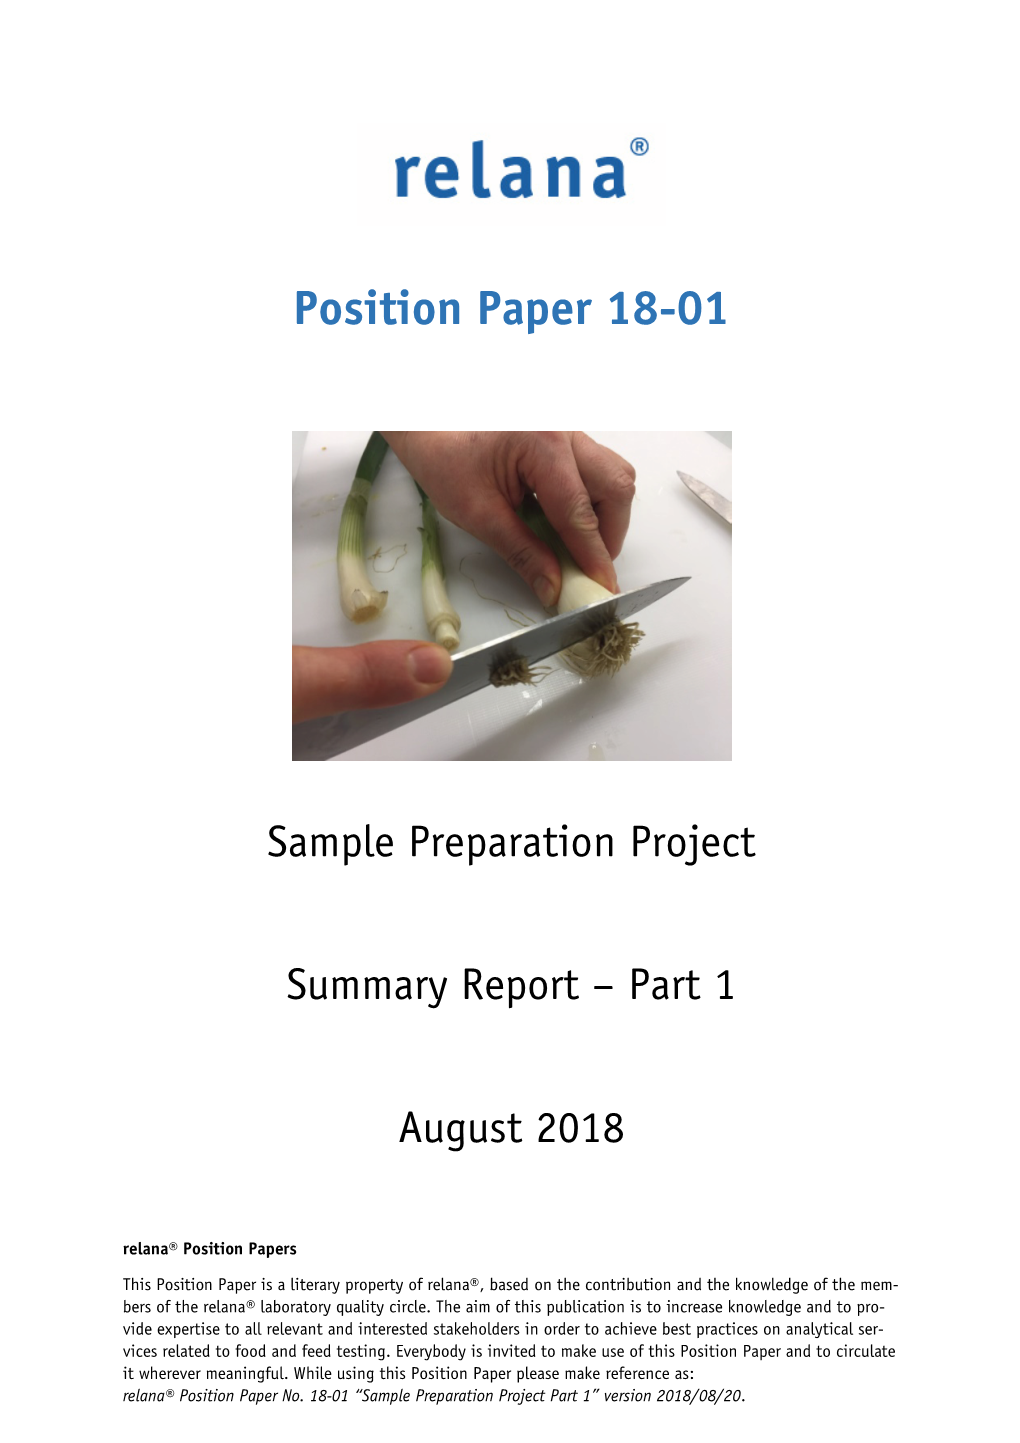 Sample Preparation Project Part 1” Version 2018/08/20